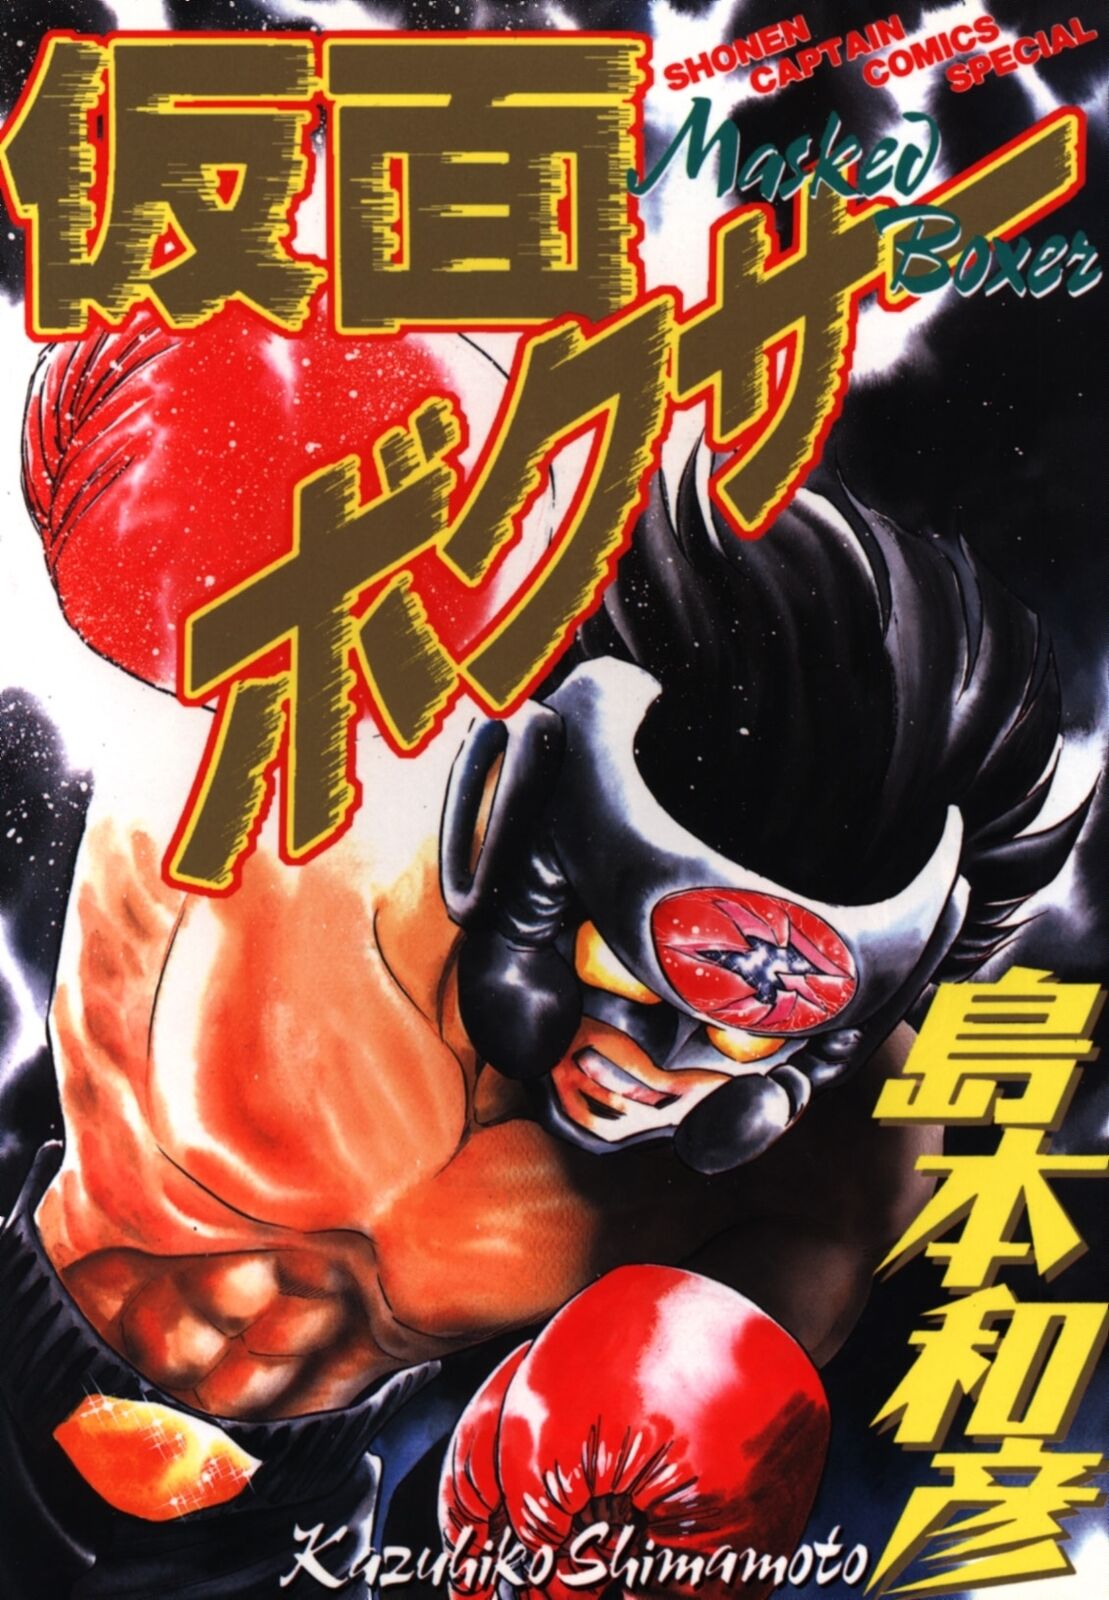 Japanese Manga tokuma shoten Shonen Captain Comics Special Kazuhiko Shimamot...